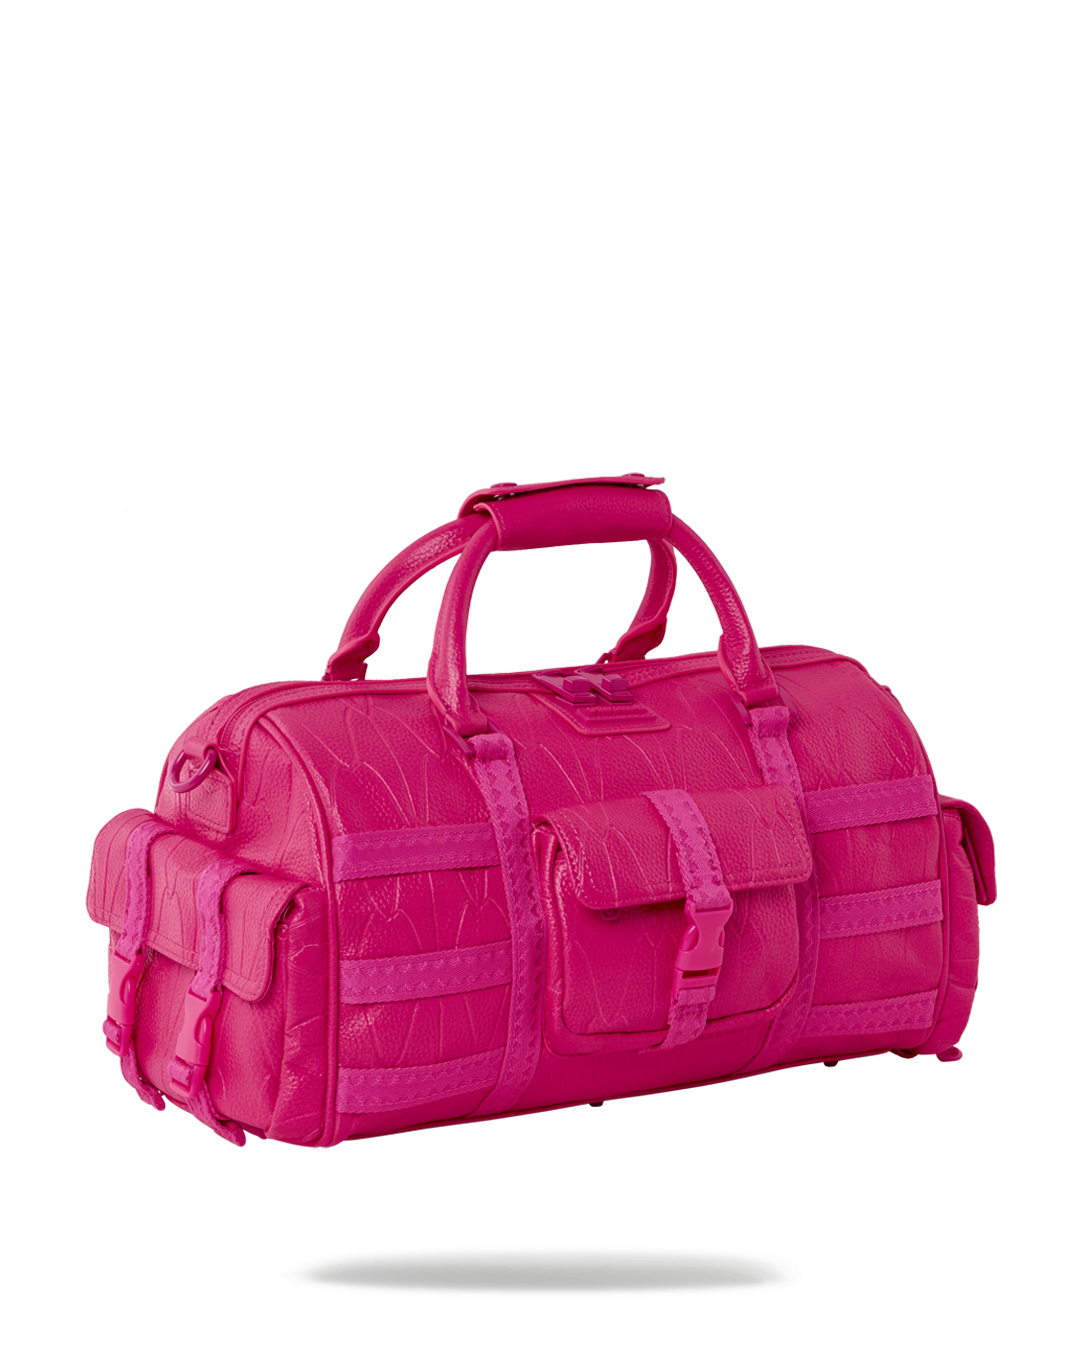 sprayground duffle bag pink